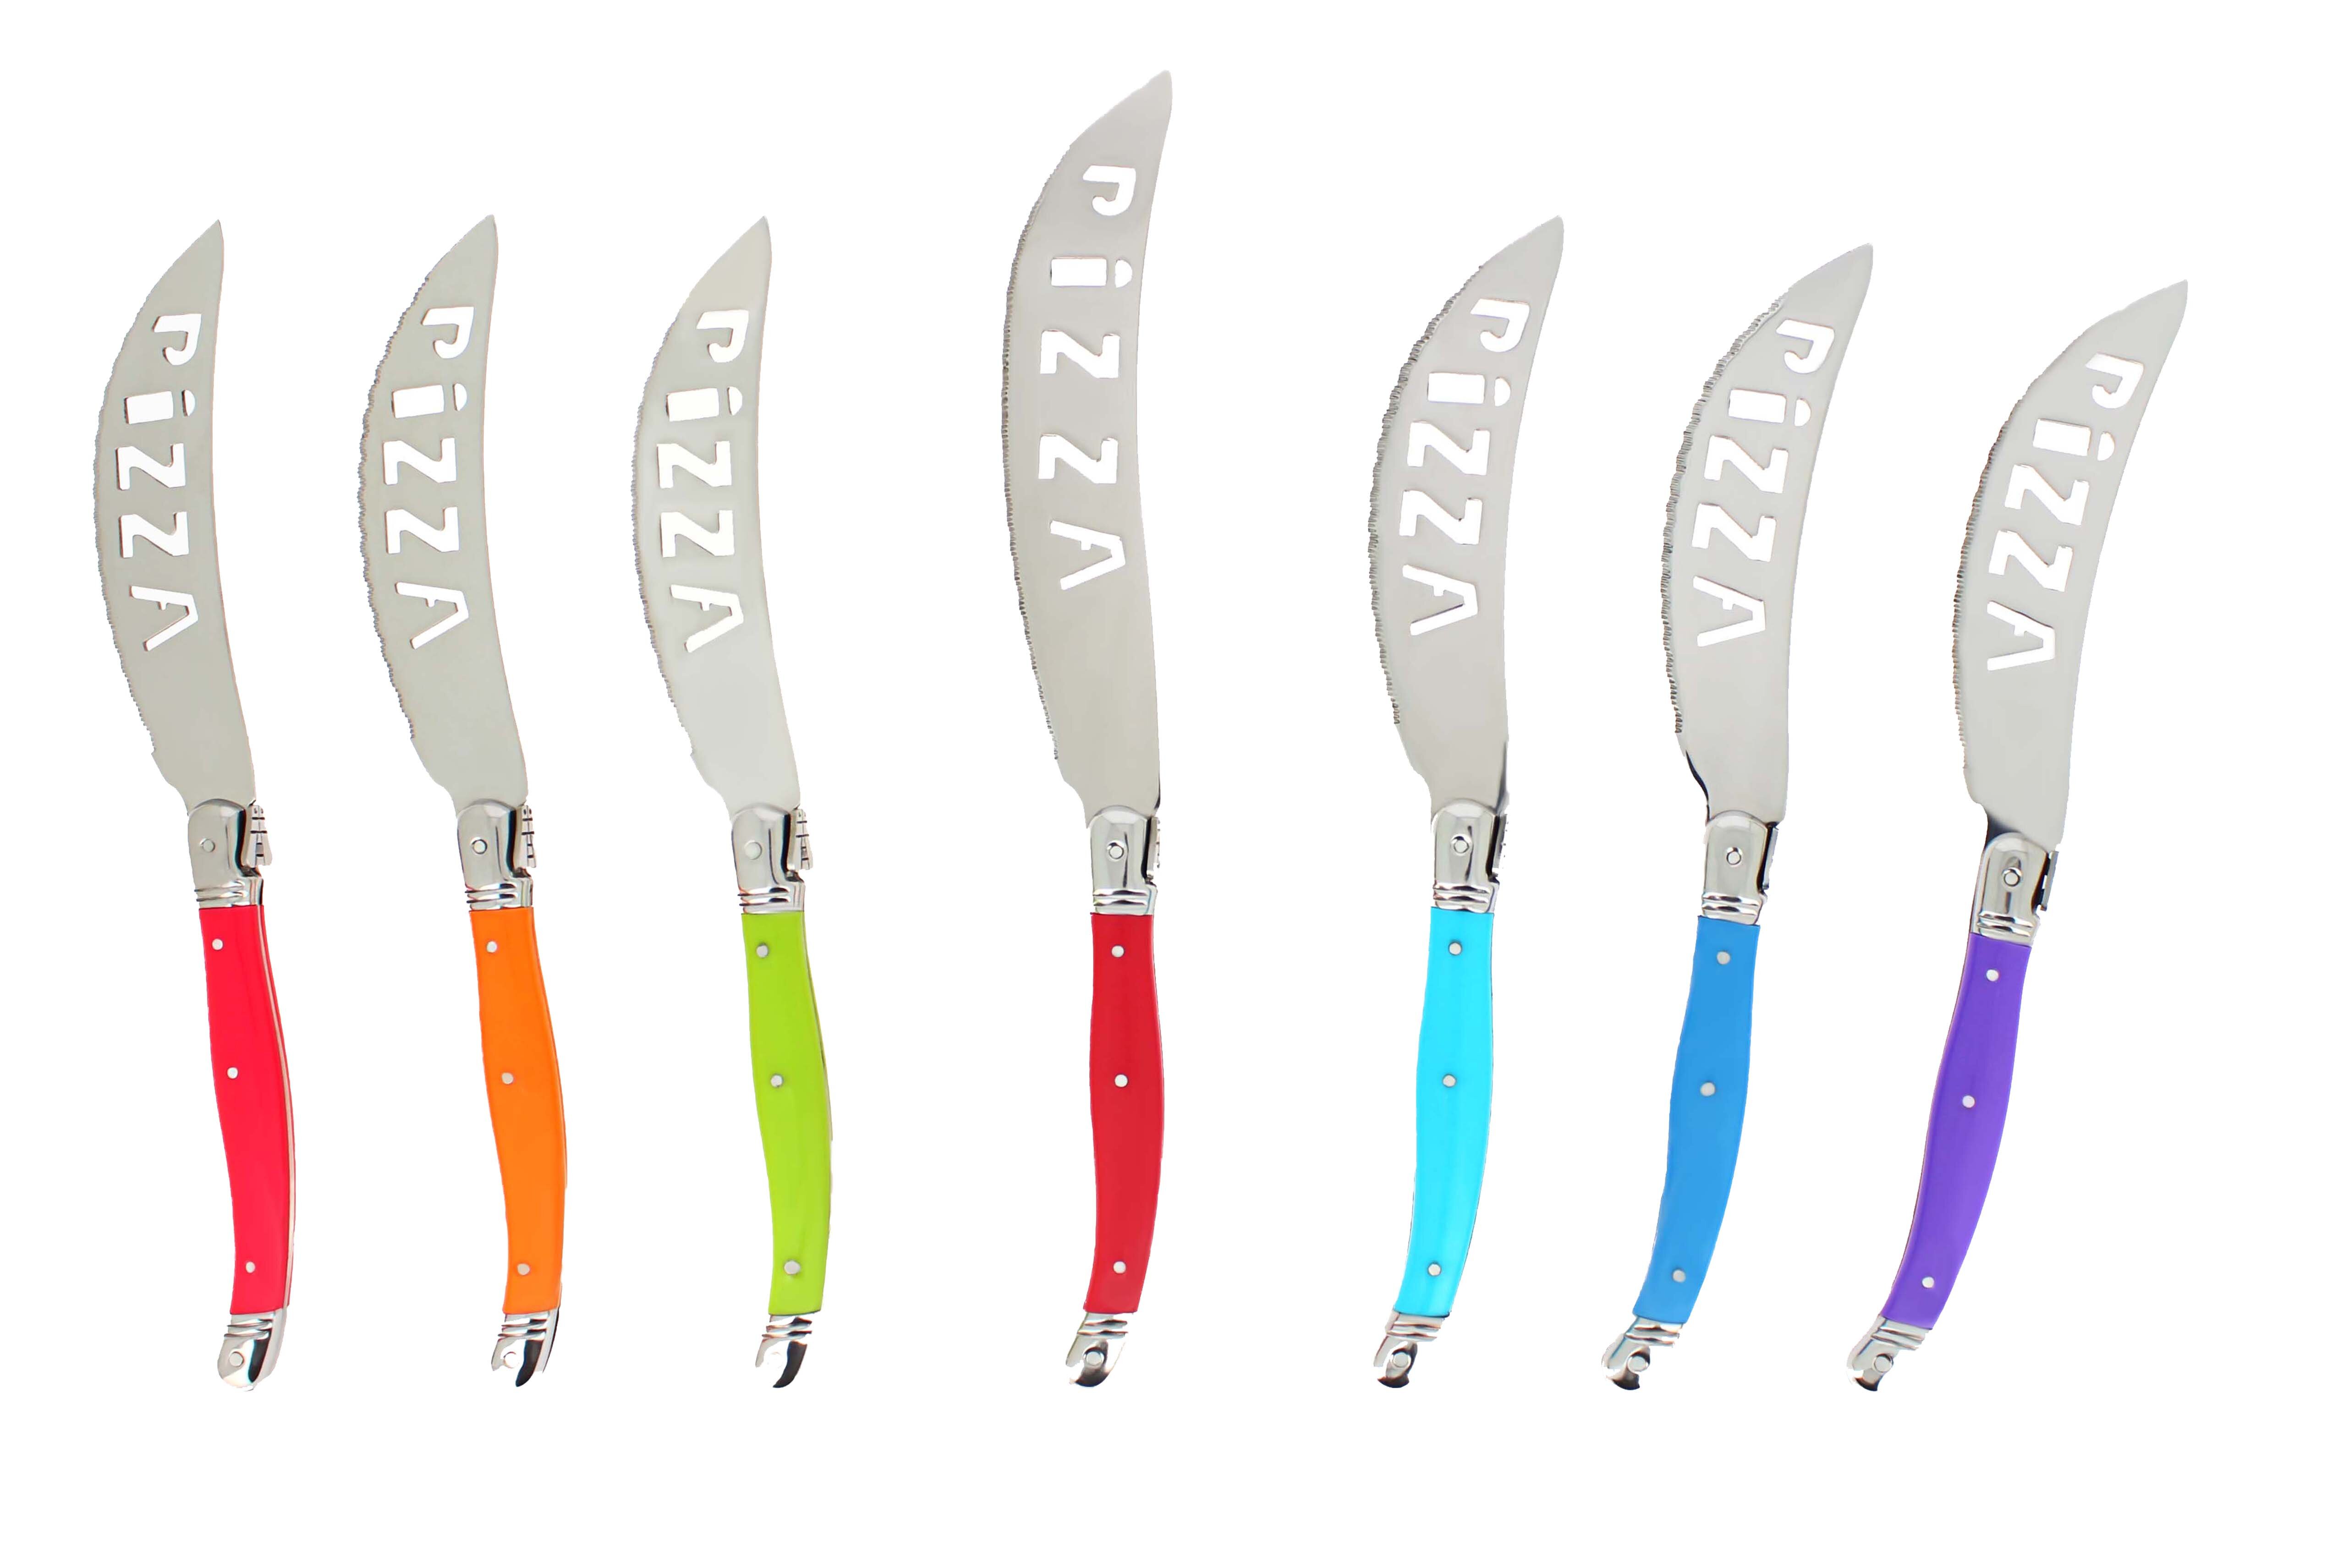 MICHELANGELO Kitchen Knife Set 10 Piece, Rainbow Knife Set For